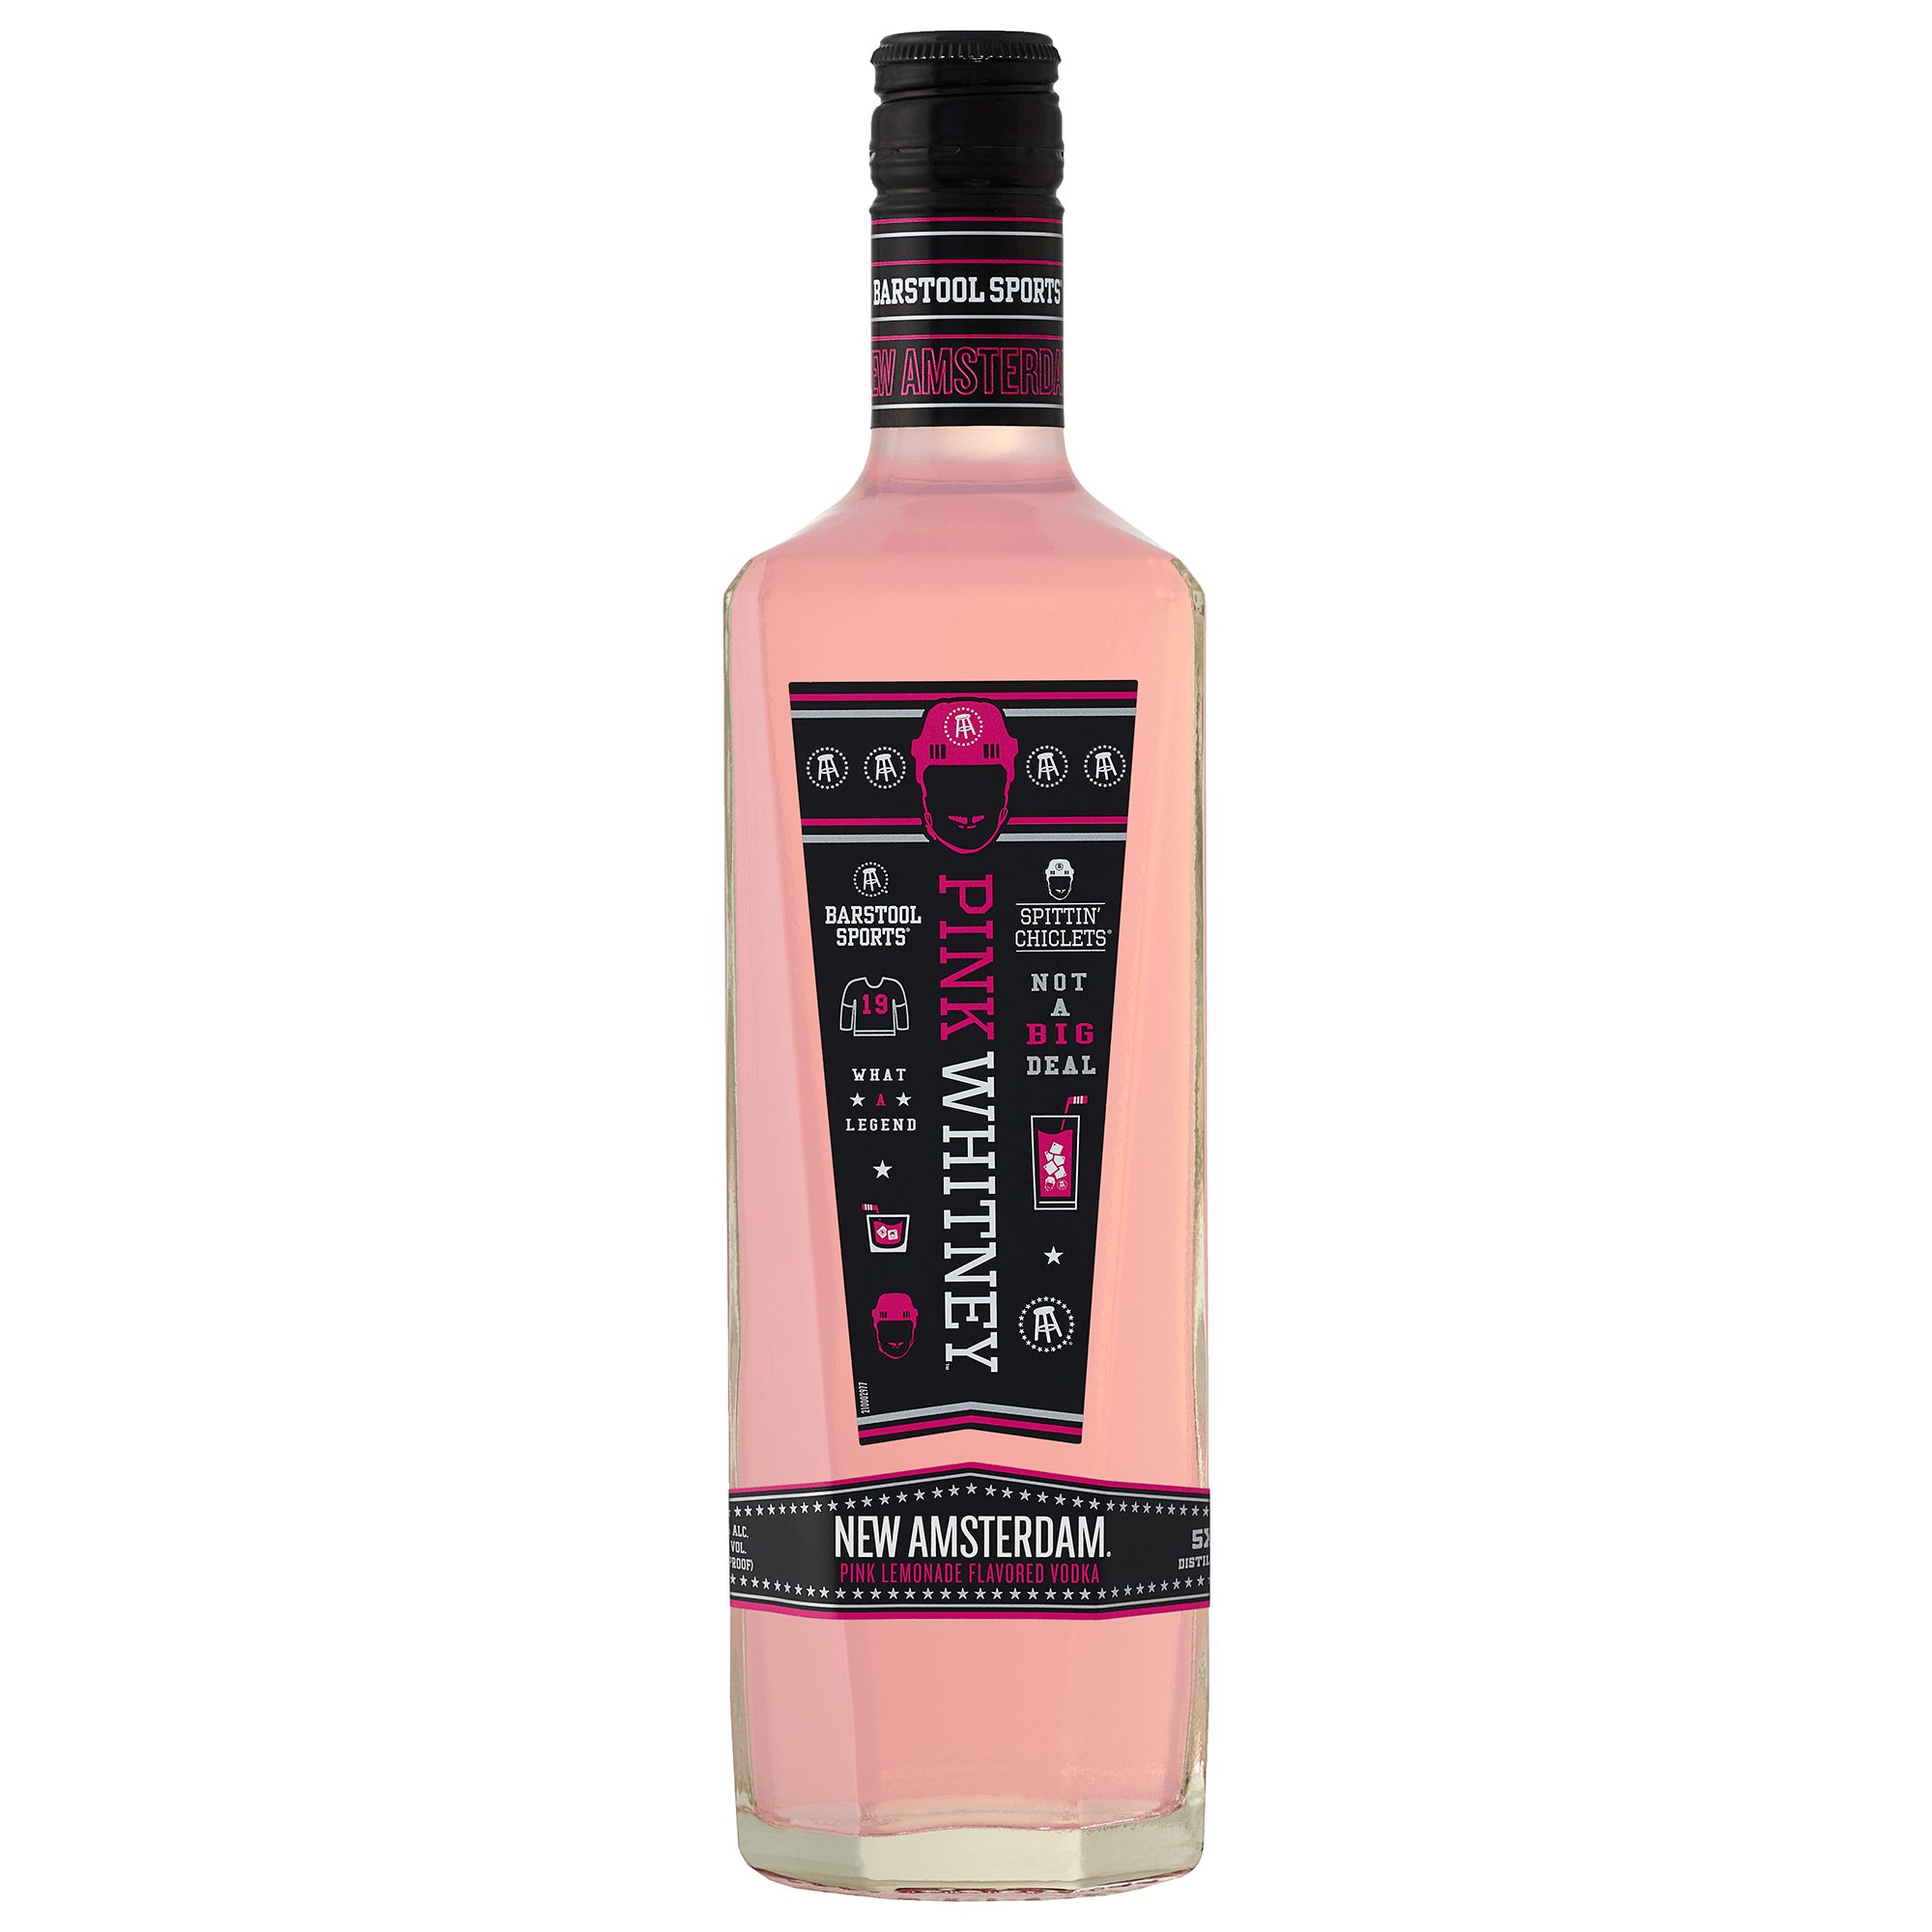 Pink Whitney Vodka - Barbank